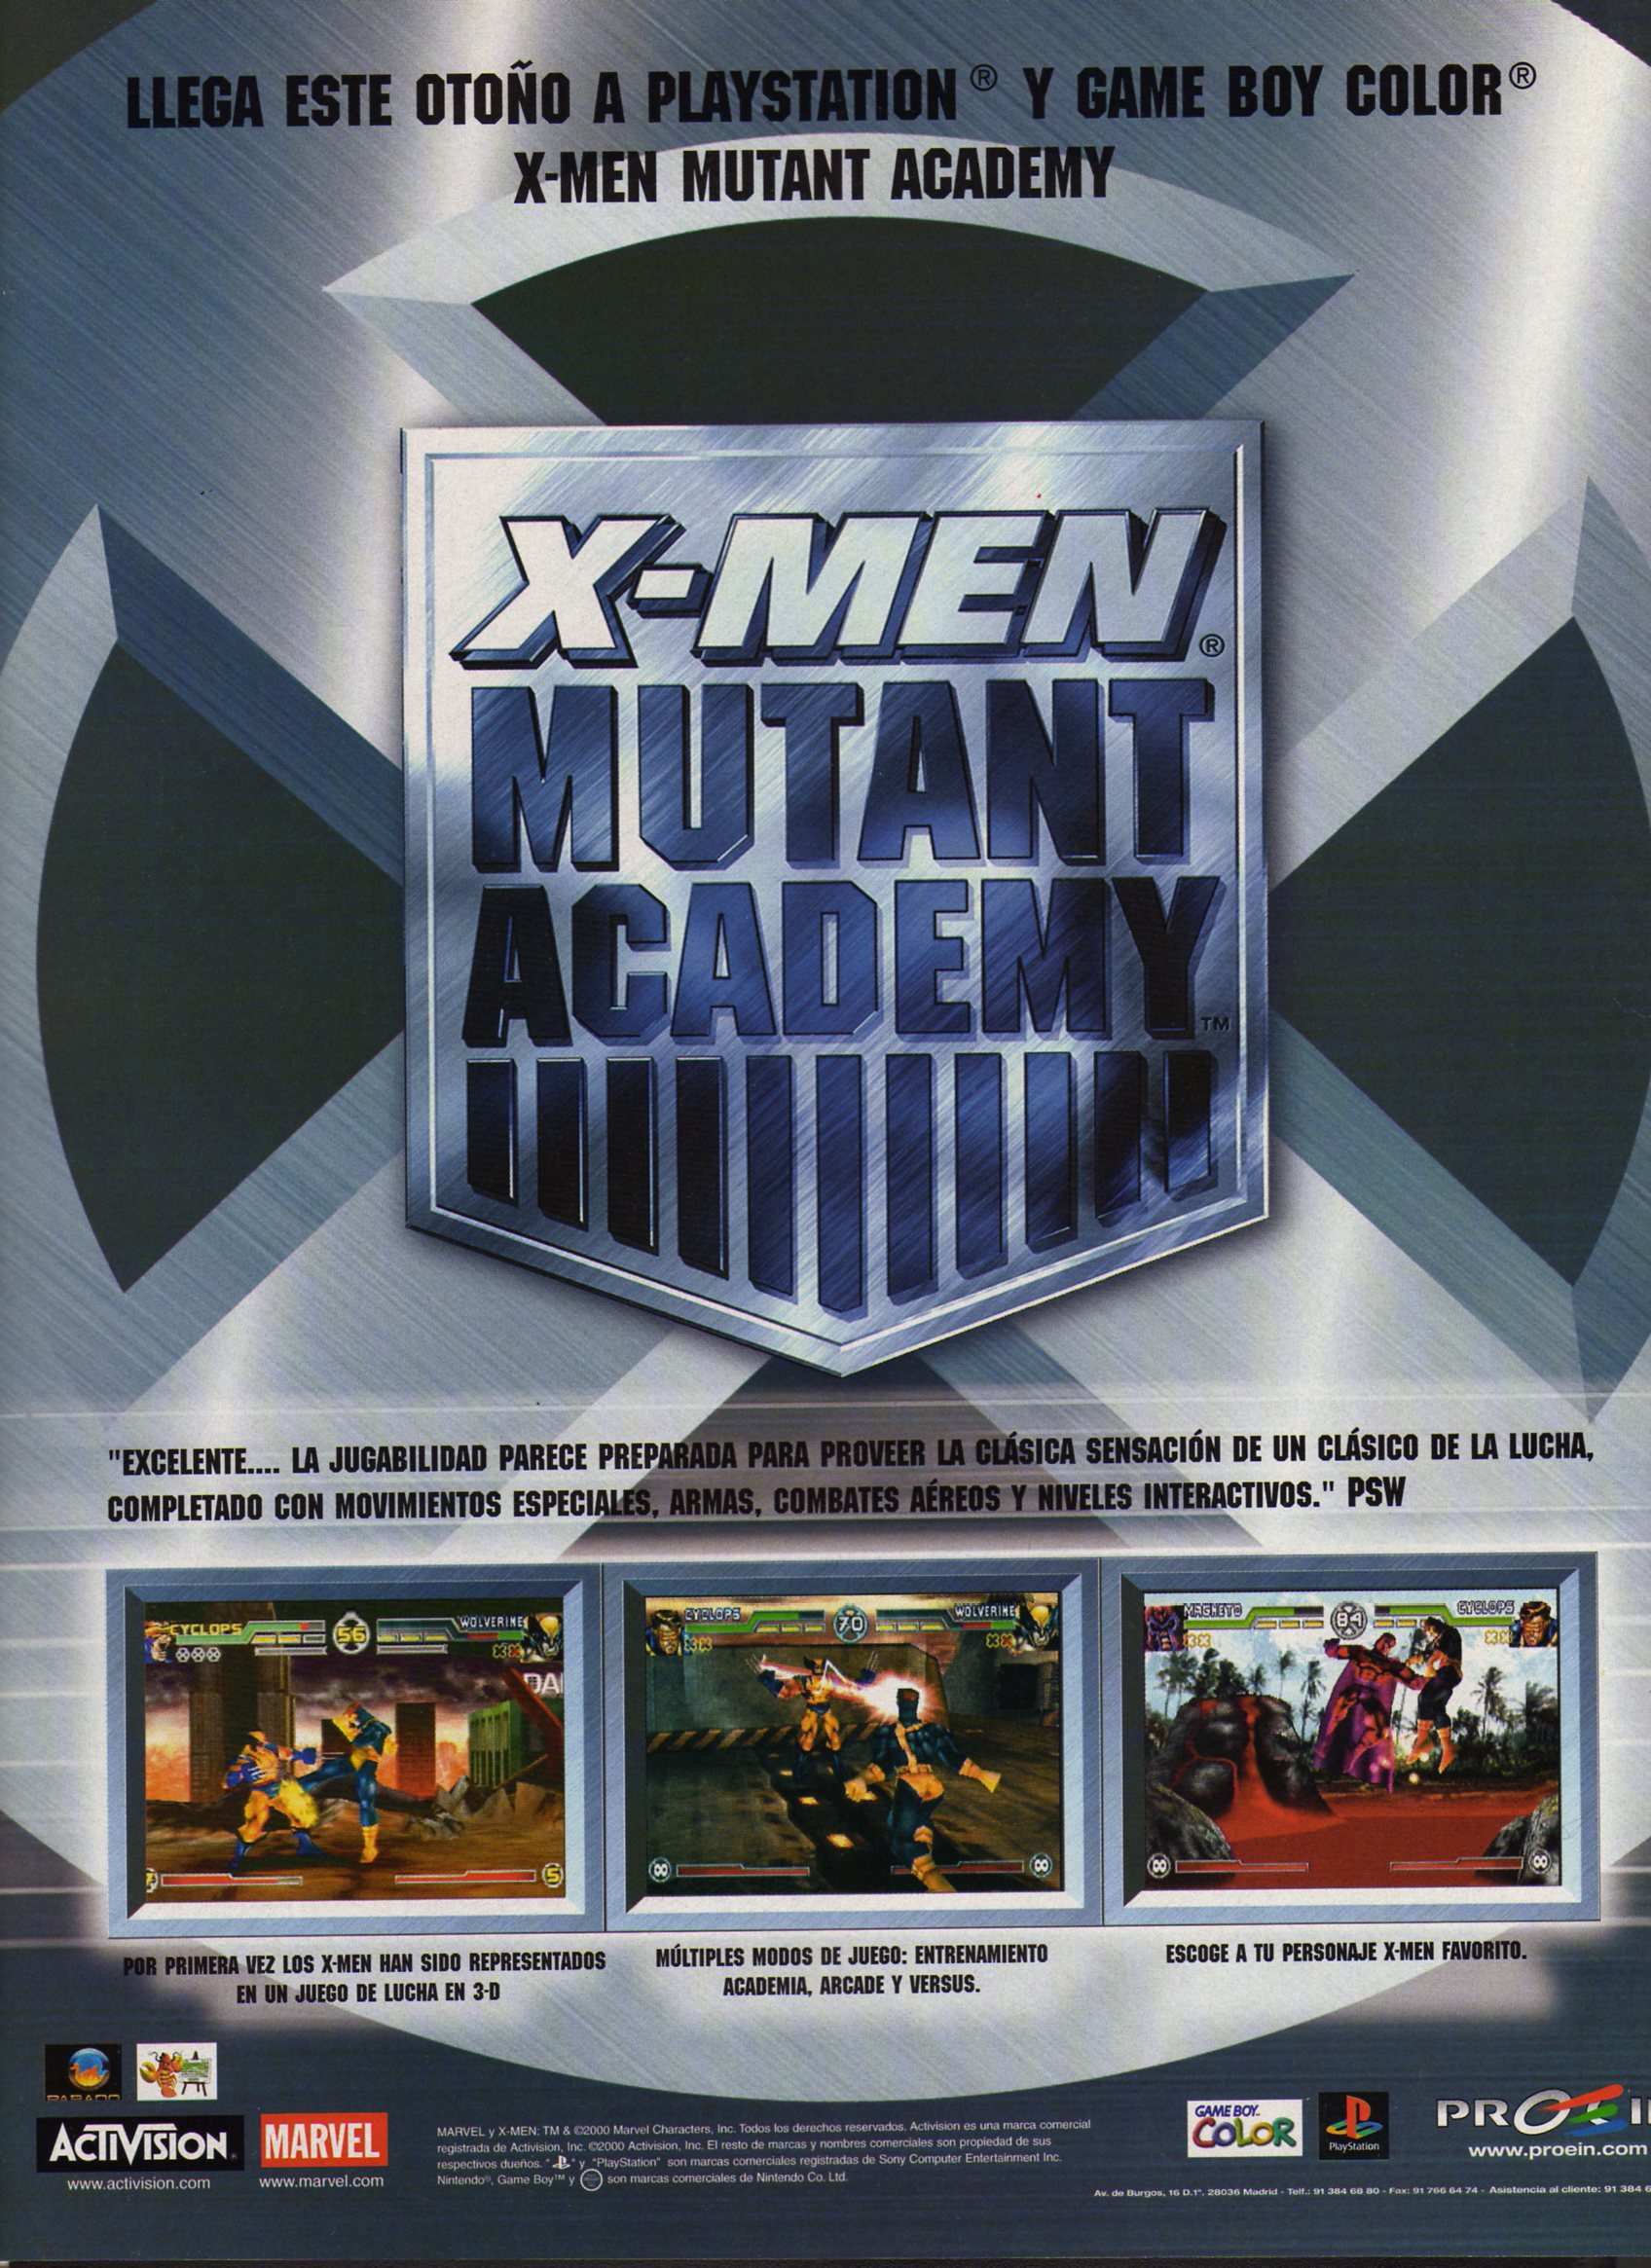 X-Men - Mutant Academy PSX cover